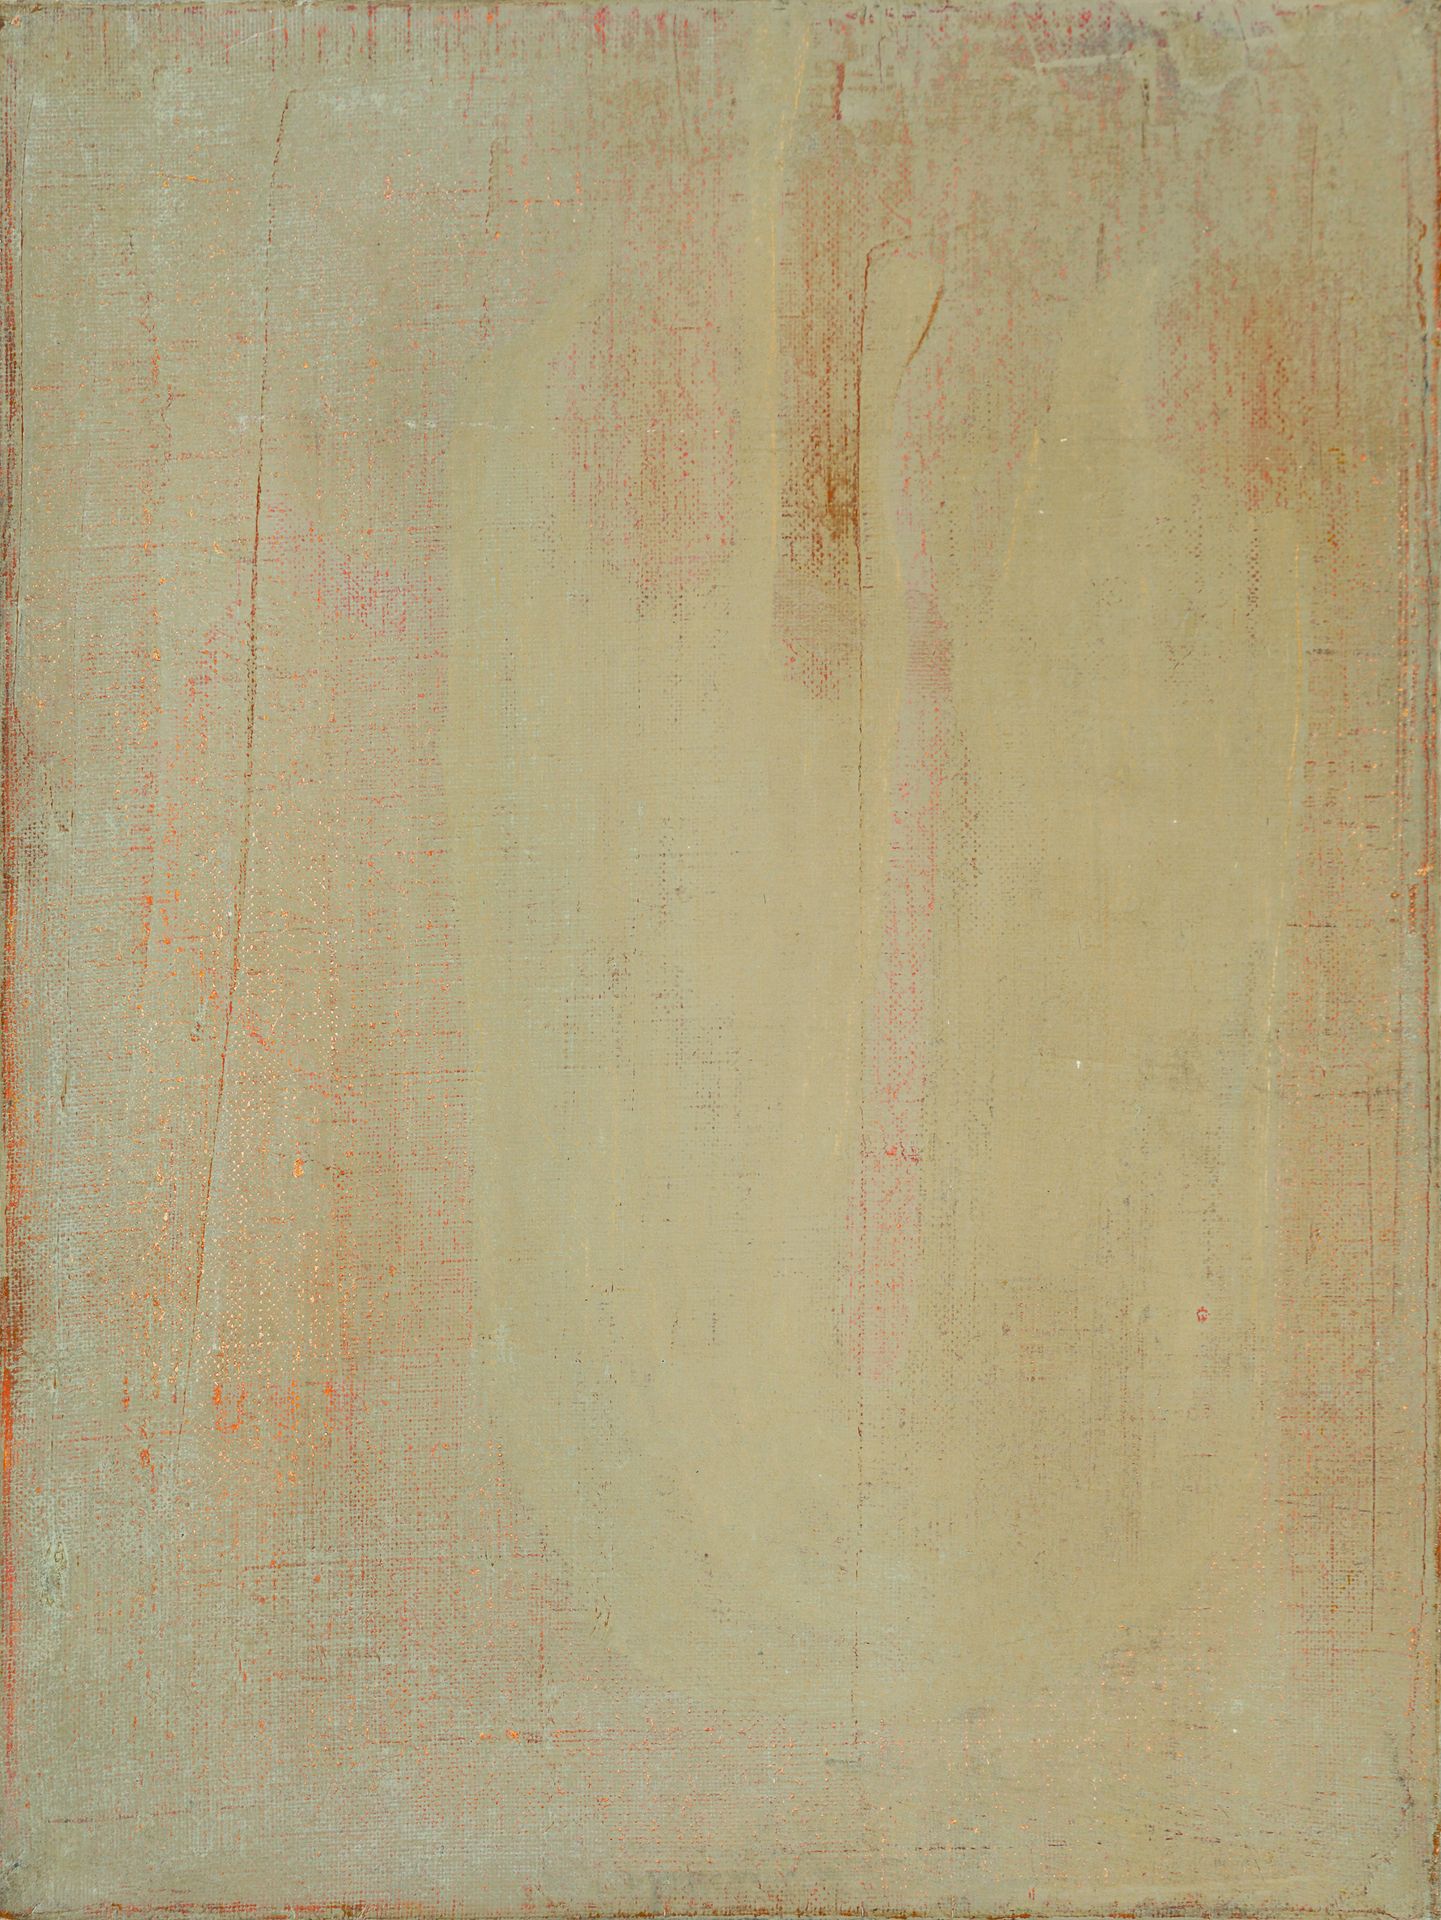 Bohatsch, Erwin 抽象II, 1993
布面油画
背面有签名和日期
40 x 30 cm

1993年，也就是《抽象II》作画的那一年，Erwin&hellip;